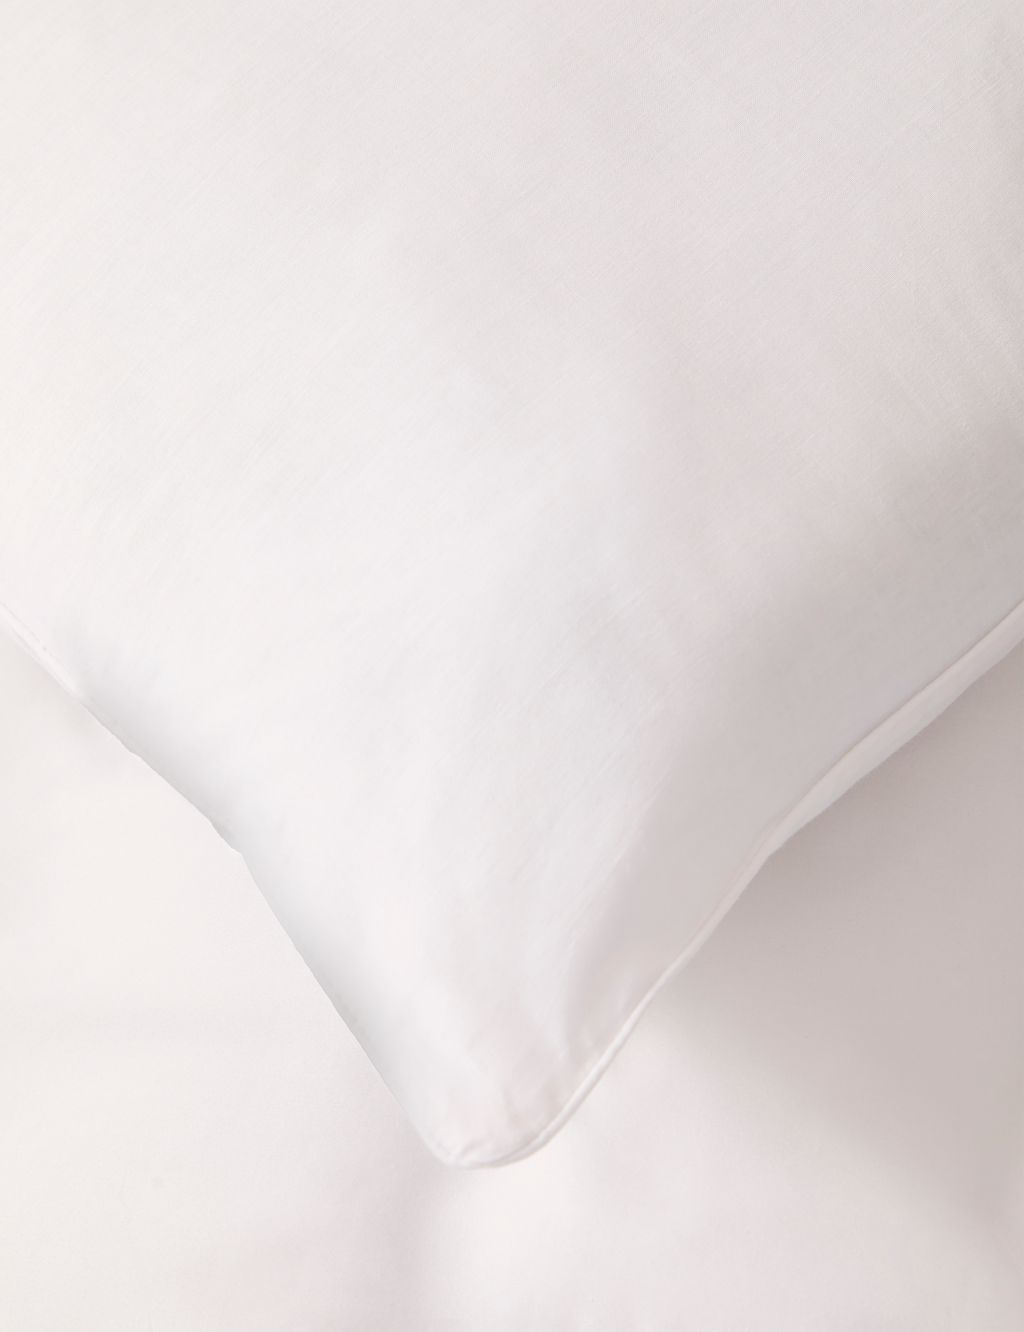 2pk Soft Cotton Medium Pillows image 1